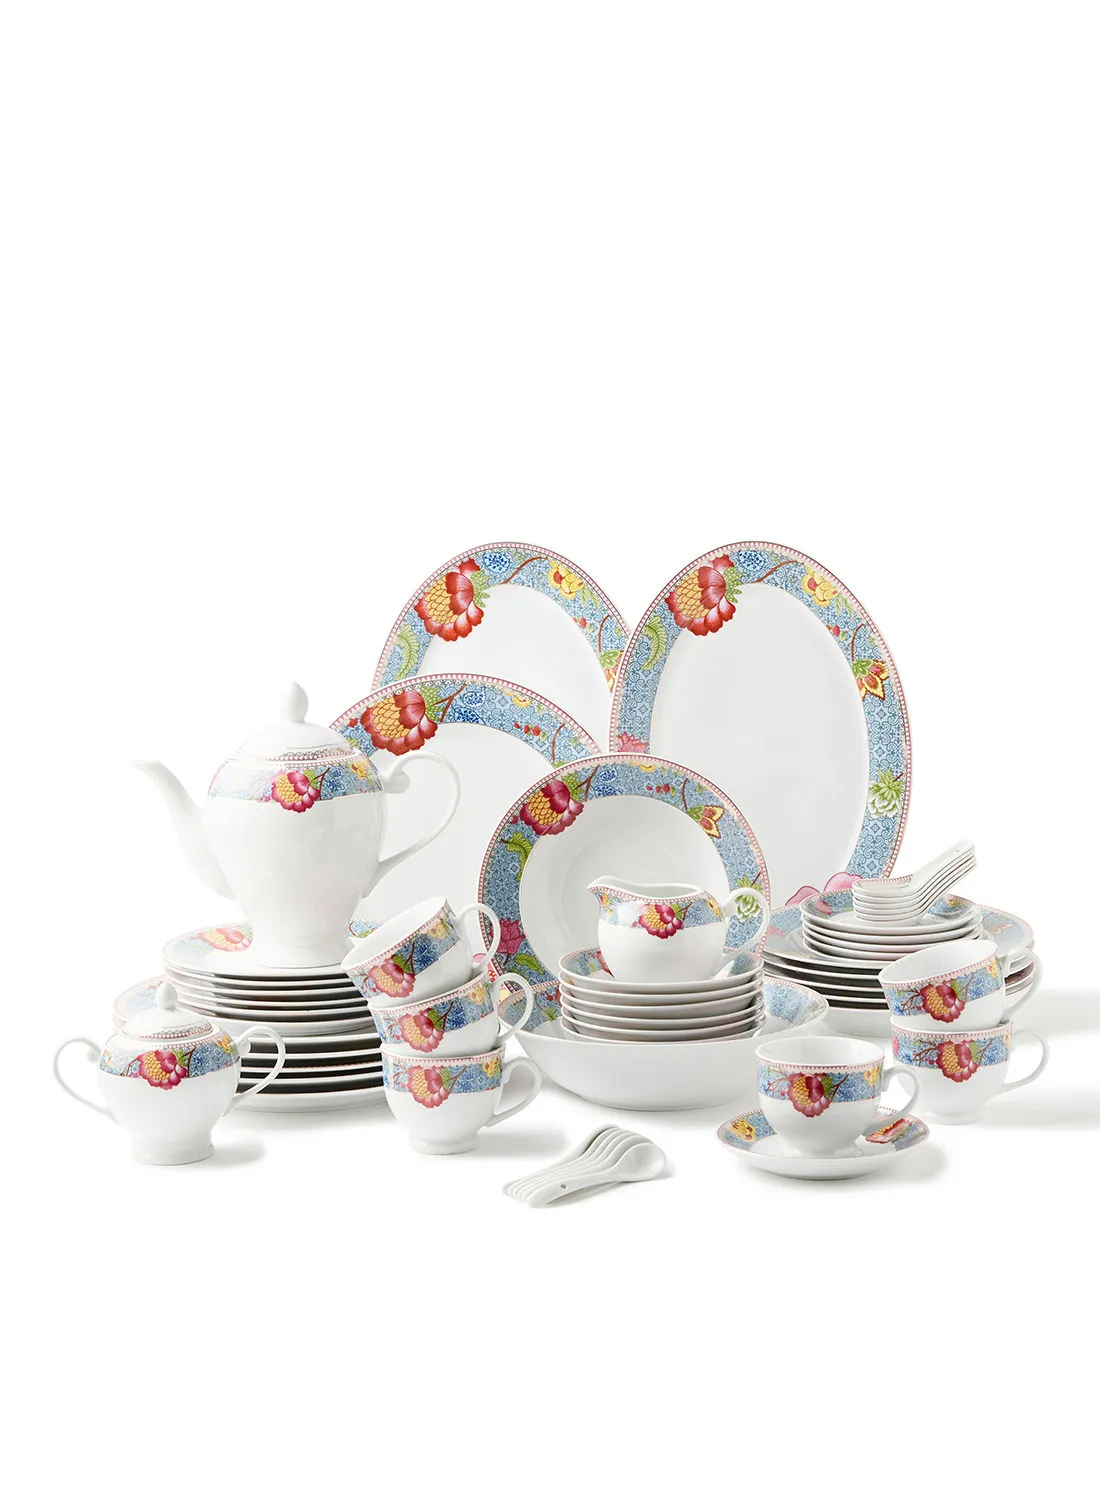 noon east 56 Piece Porcelain Dinner Set - Dishes, Plates - Dinner Plate, Side Plate, Bowl, Cups, Serving Dish And Bowl - Serves 6 - Festive Design Bloom